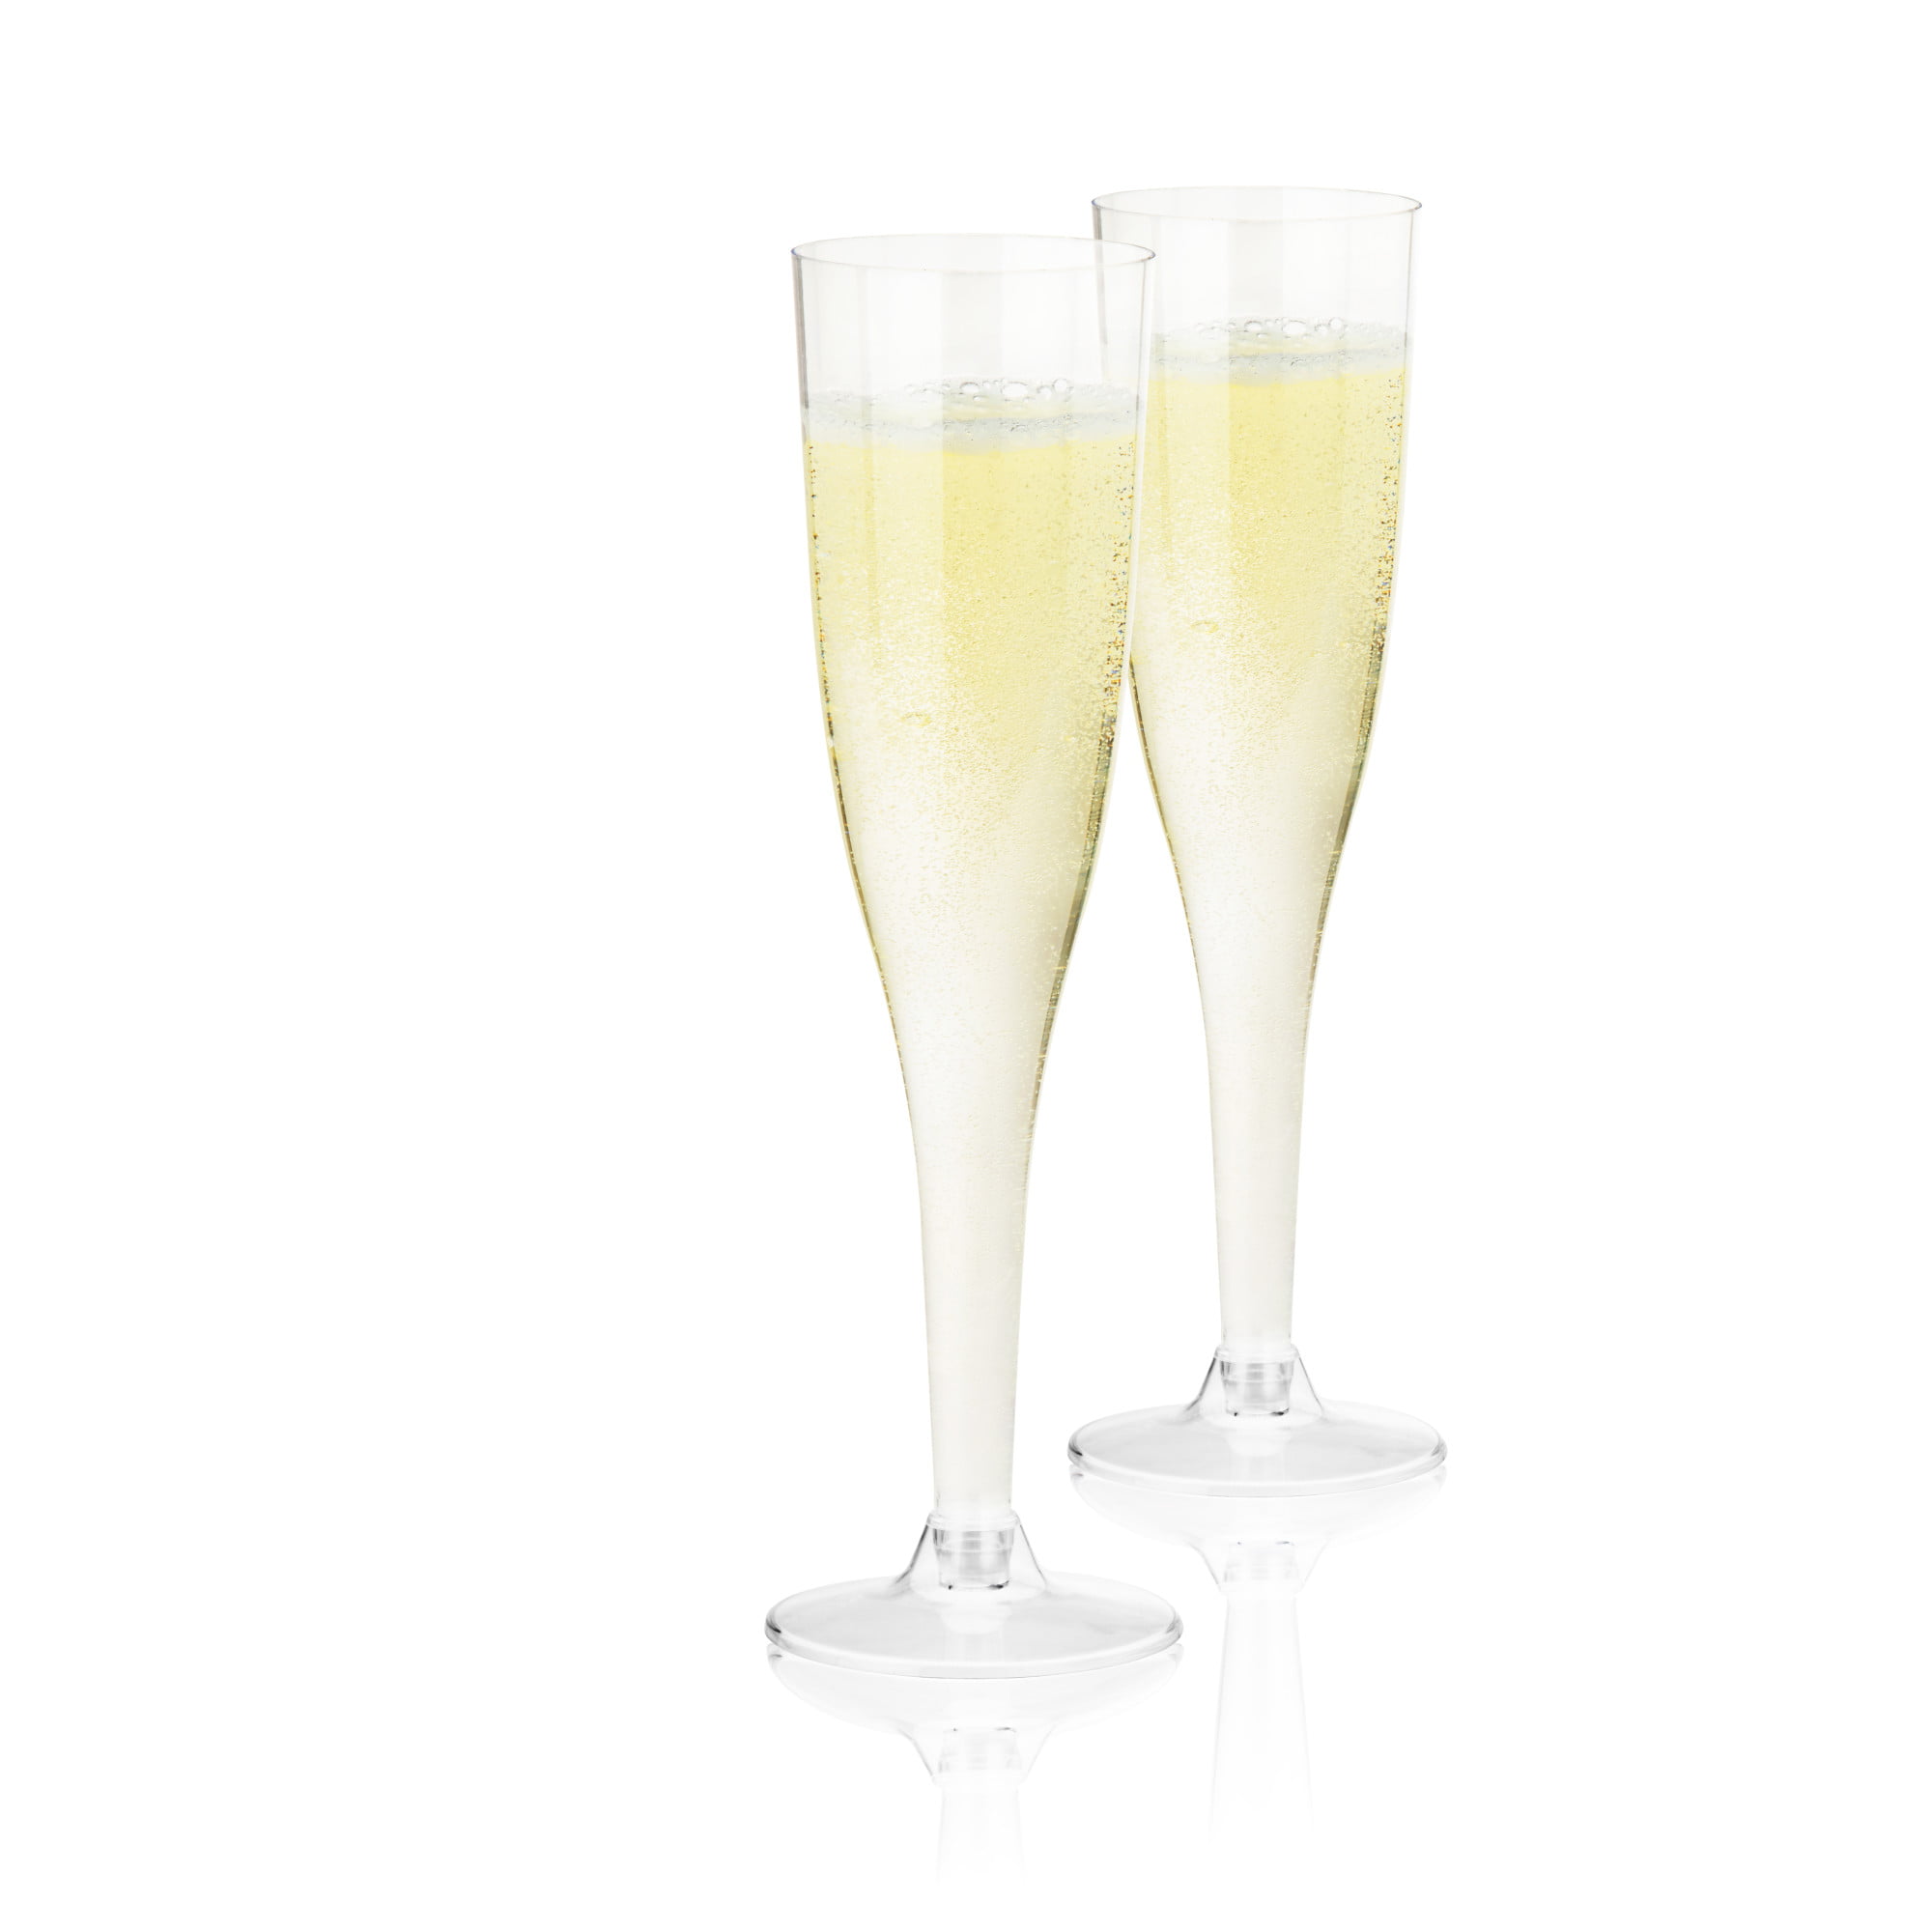 Amscan Plastic Champagne Flutes, 5.5 oz, Clear